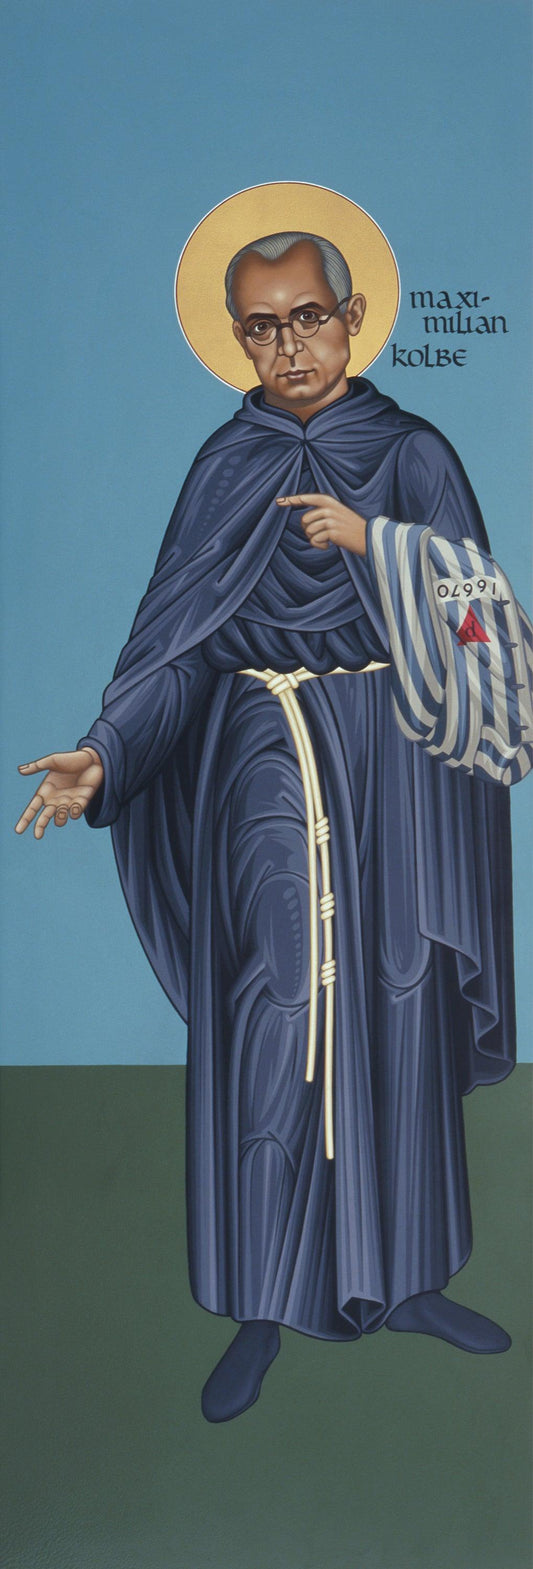 Giclée Print - St. Maximilian Kolbe by R. Lentz - trinitystores by Br. Robert Lentz, OFM - Trinity Stores